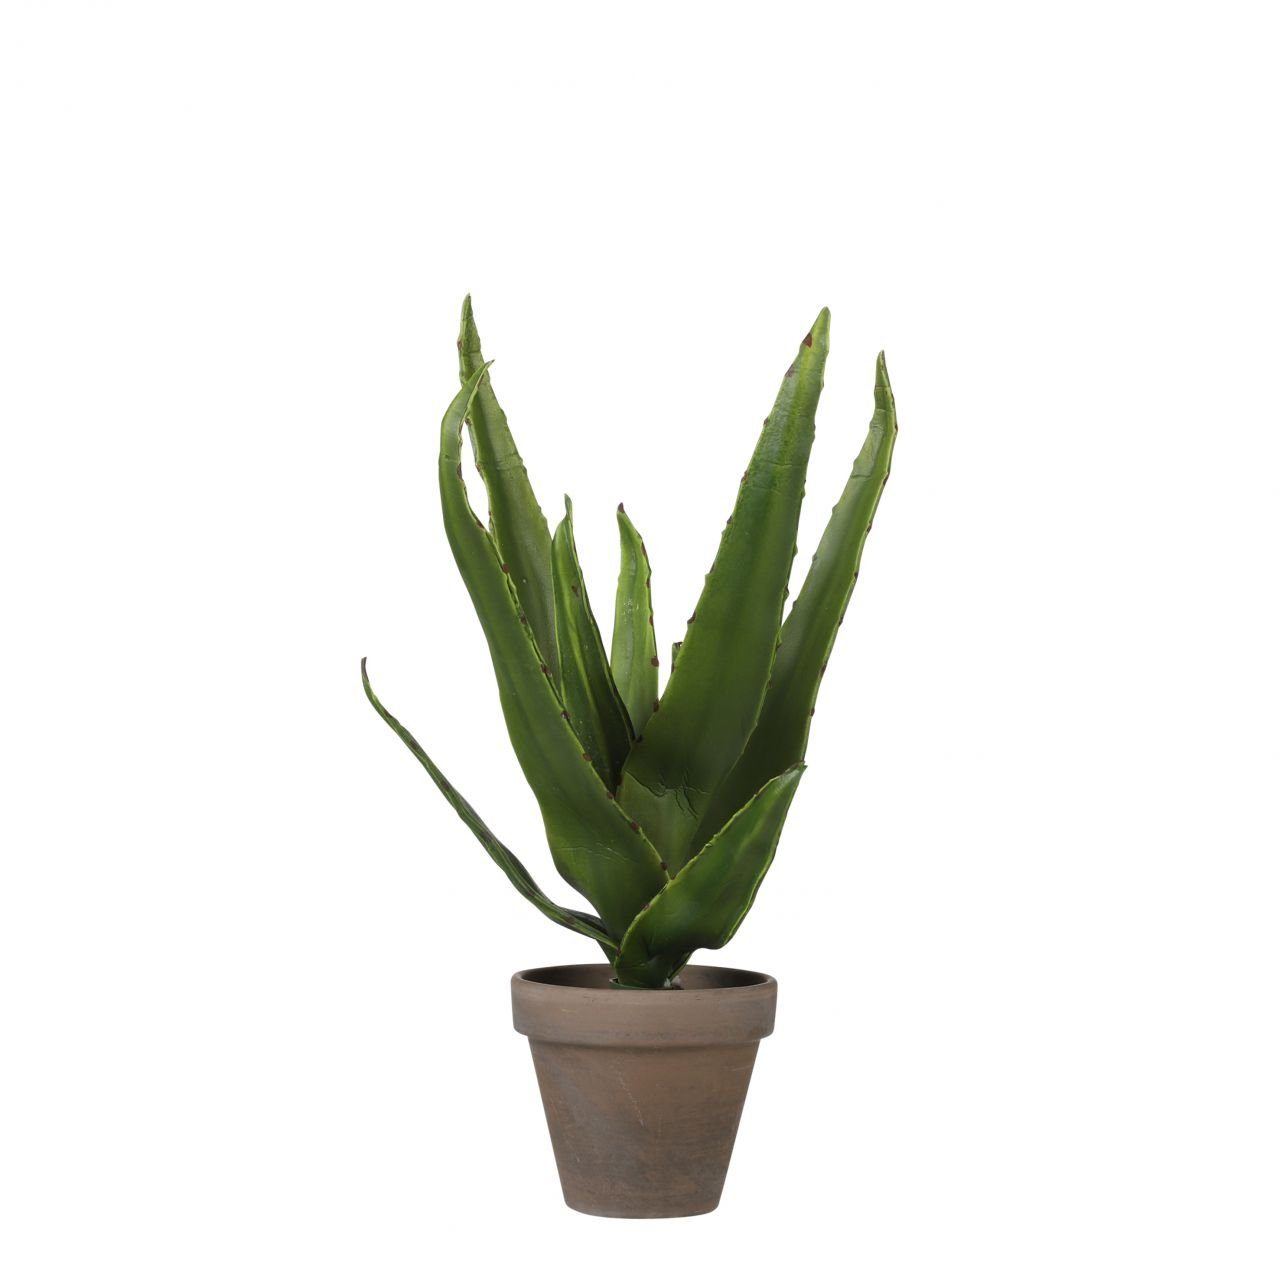 Kunstpflanze Mica im x 30 Mica Kunstpflanze 16, Topf grün, Aloe Decorations Vera